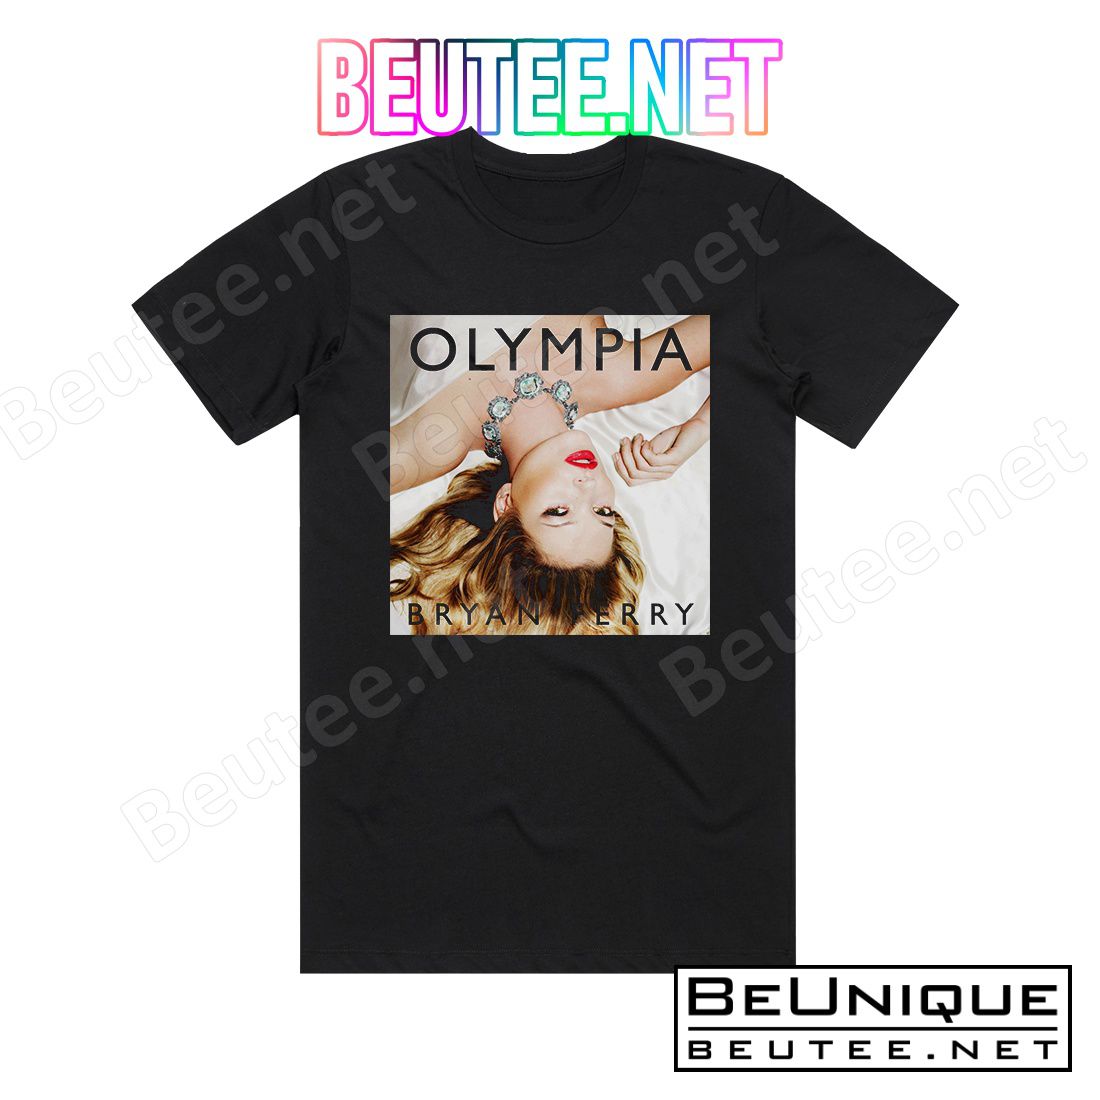 Bryan Ferry Olympia Album Cover T-Shirt